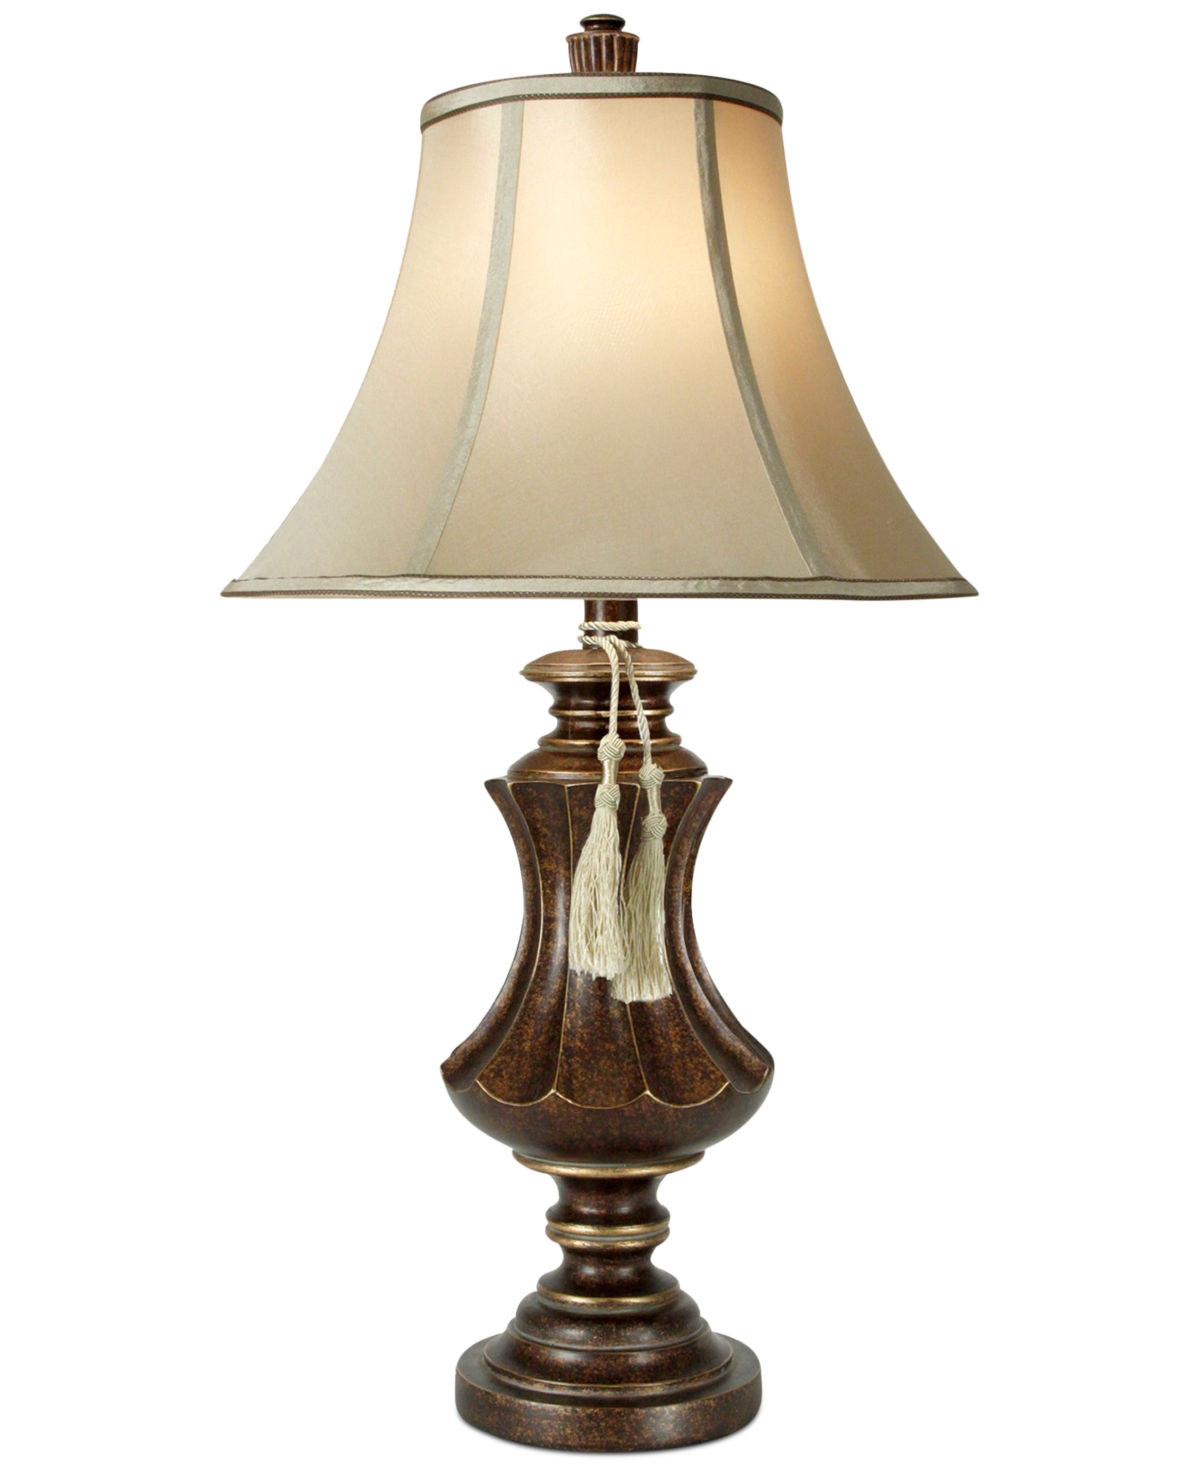 Stylecraft Golden Winthrop Table Lamp In Winthrop W,gold Highlight